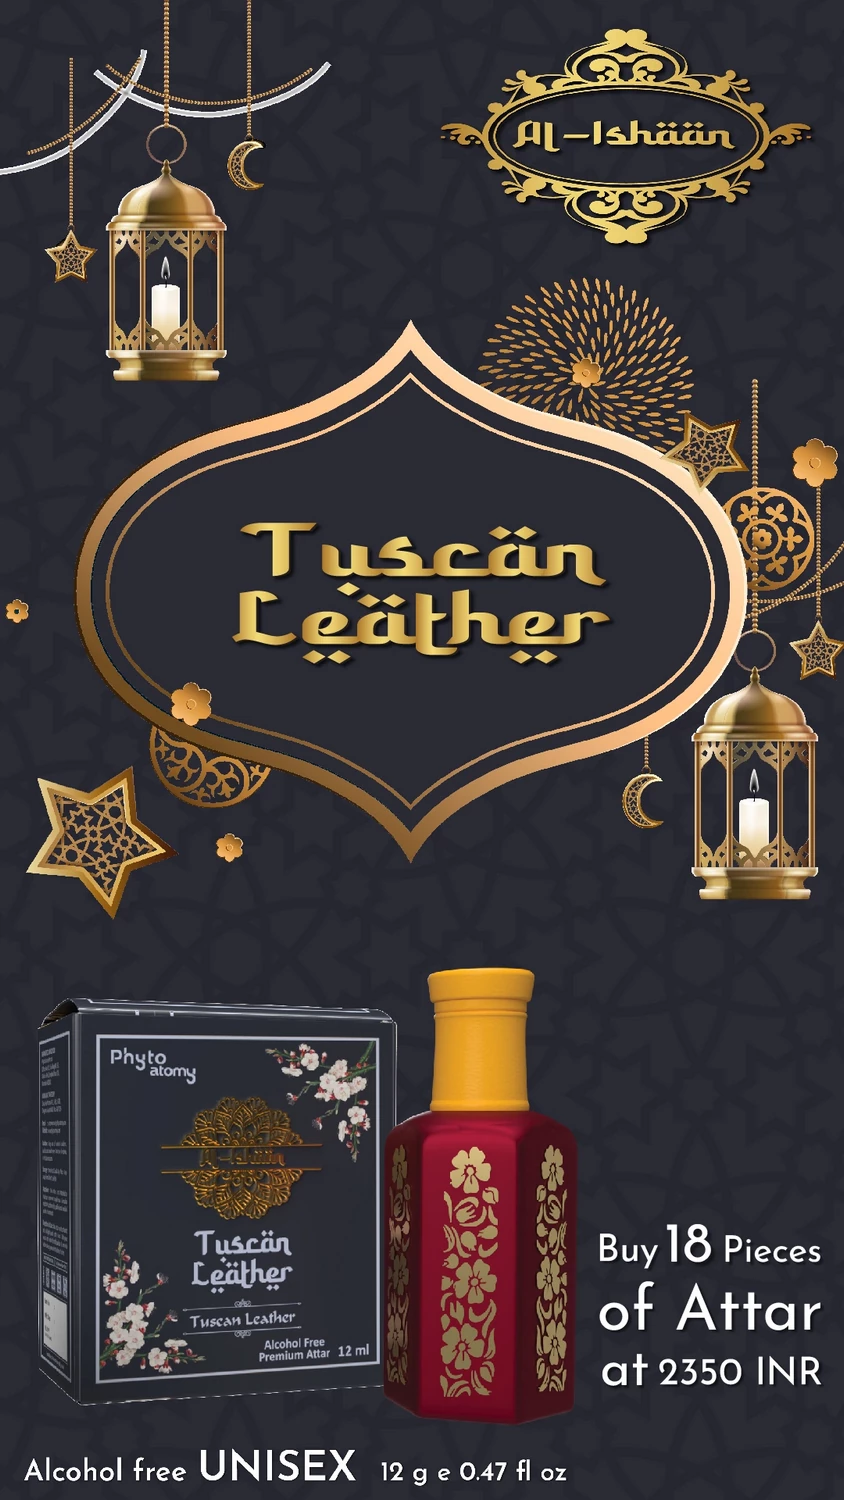 RBV B2B Tuscan Leather Attar Soap (50g)- 36 Pcs.